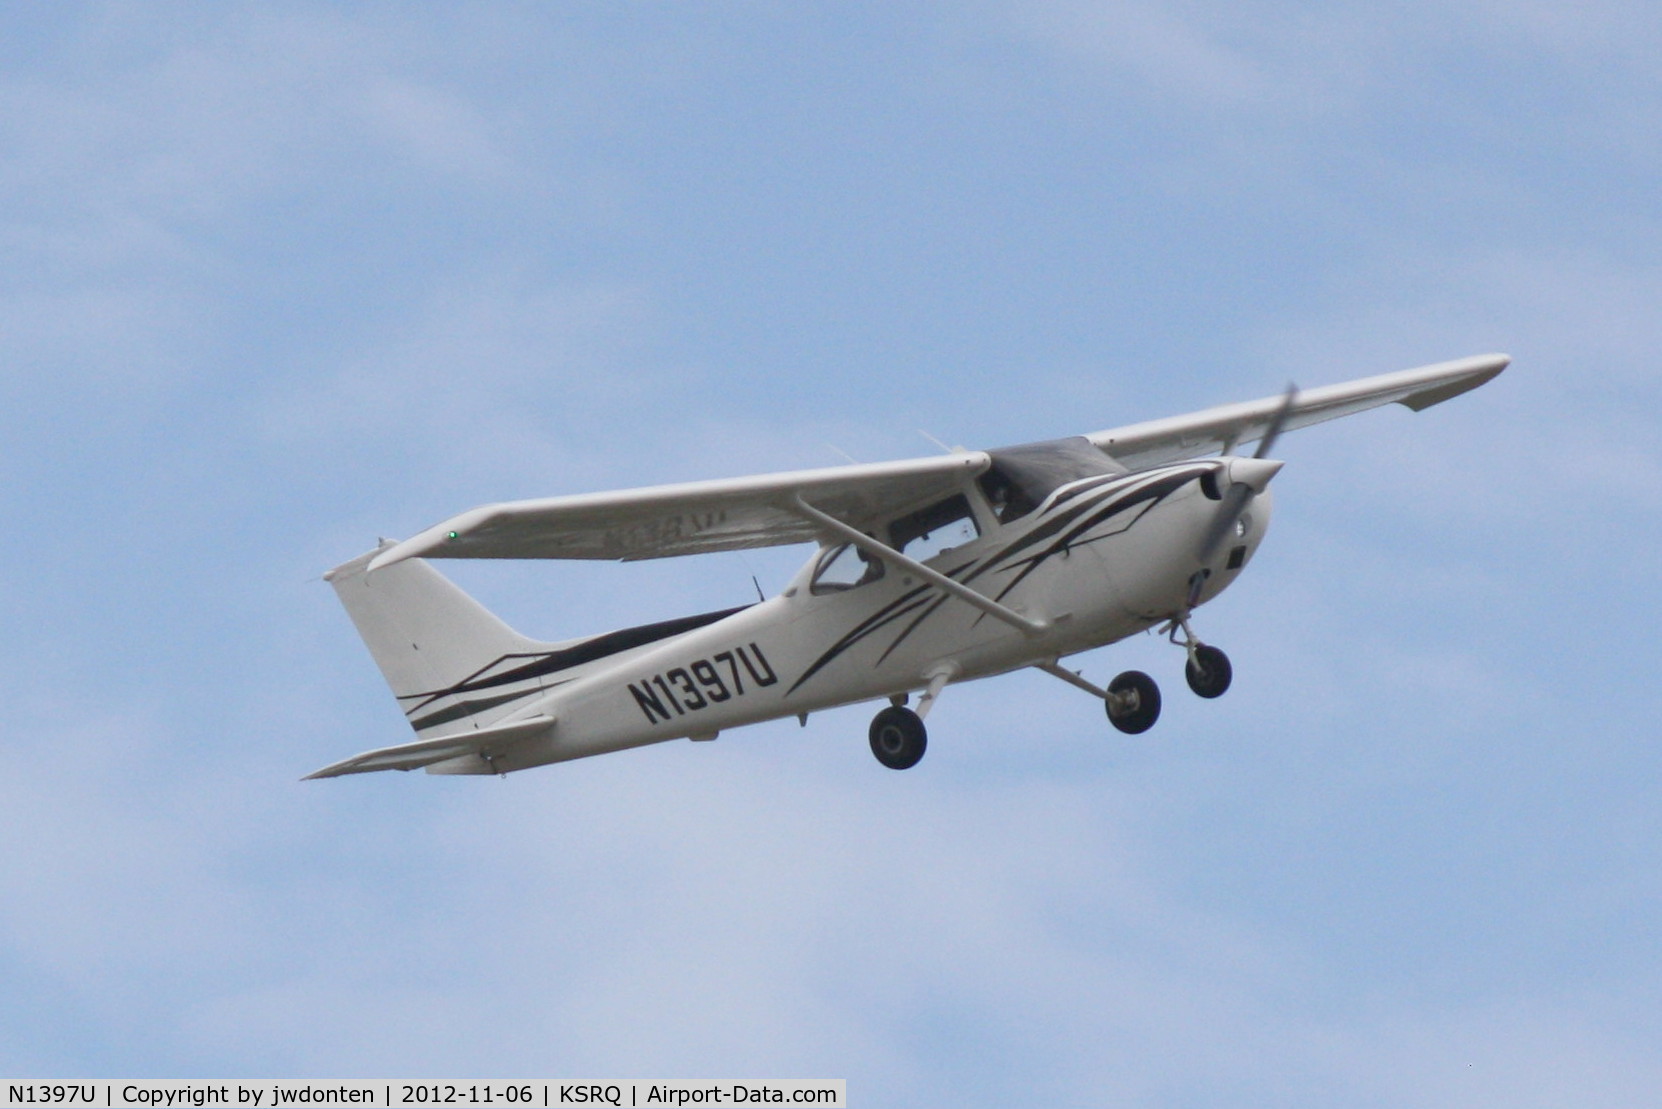 N1397U, 1976 Cessna 172M C/N 17267068, Manatee County Sheriff's Office Cessna Skyhawk (N1397U) departs Sarasota-Bradenton International Airport